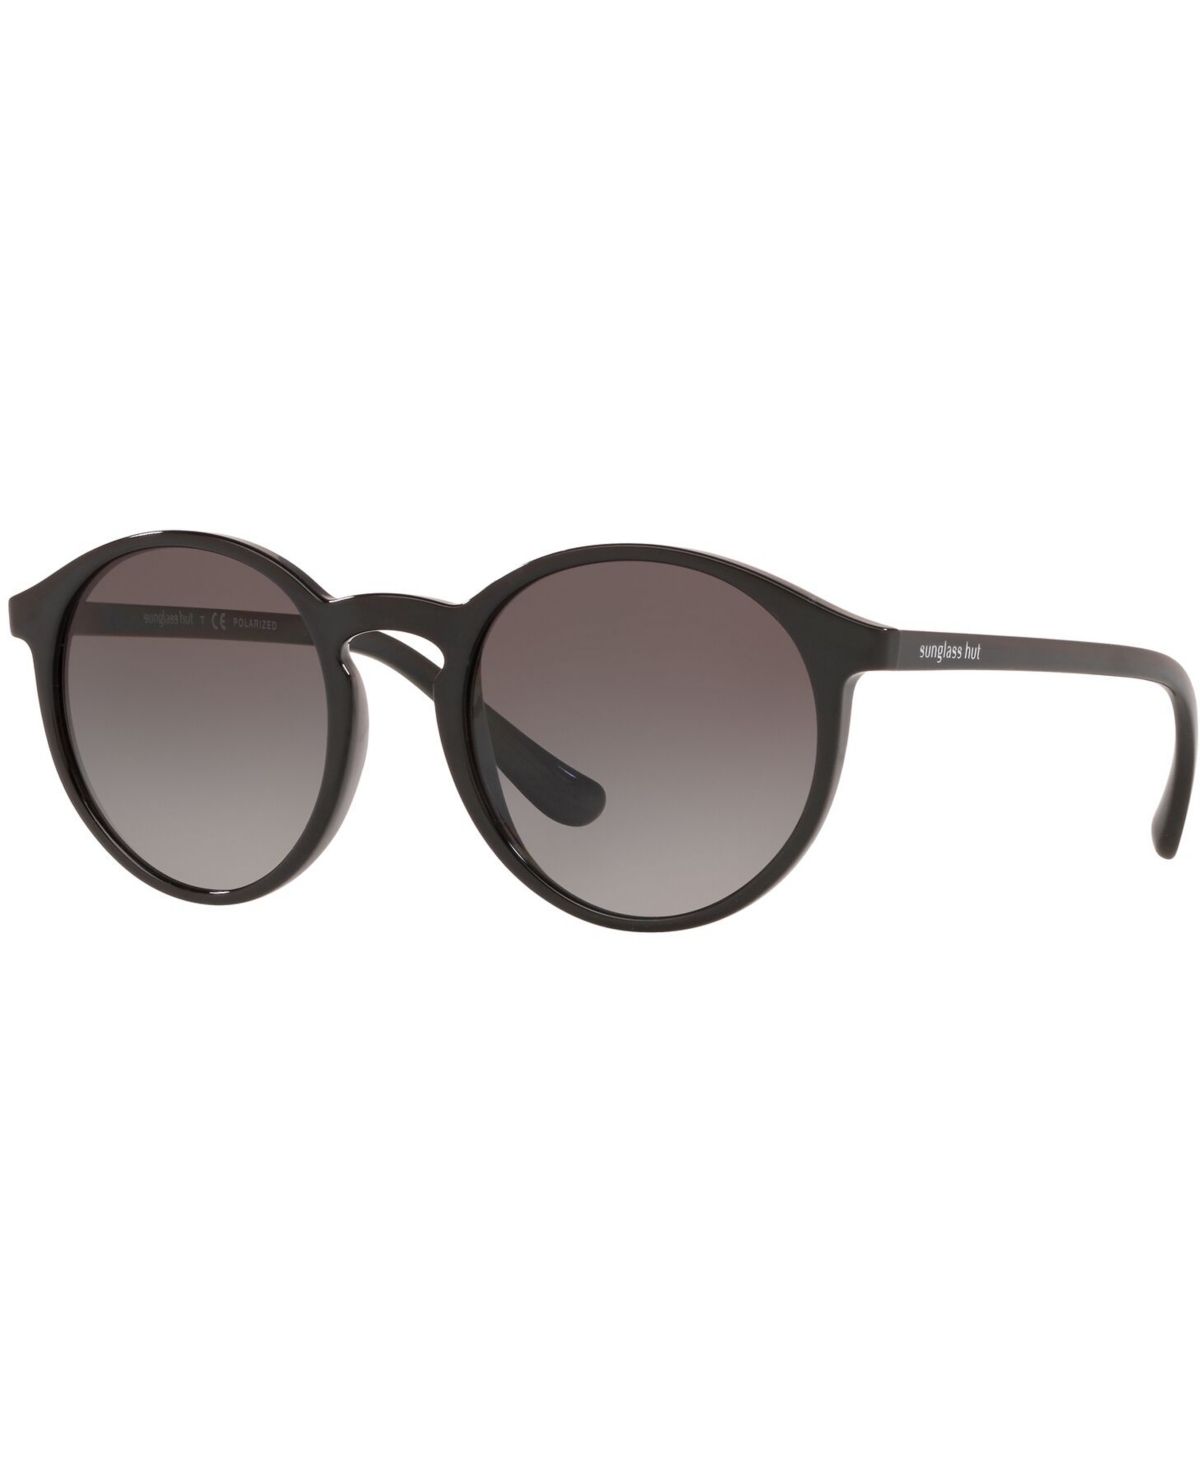 Polarized Sunglasses, 0HU2019 - SHINY HAVANA/POLAR GRADIENT BROWN